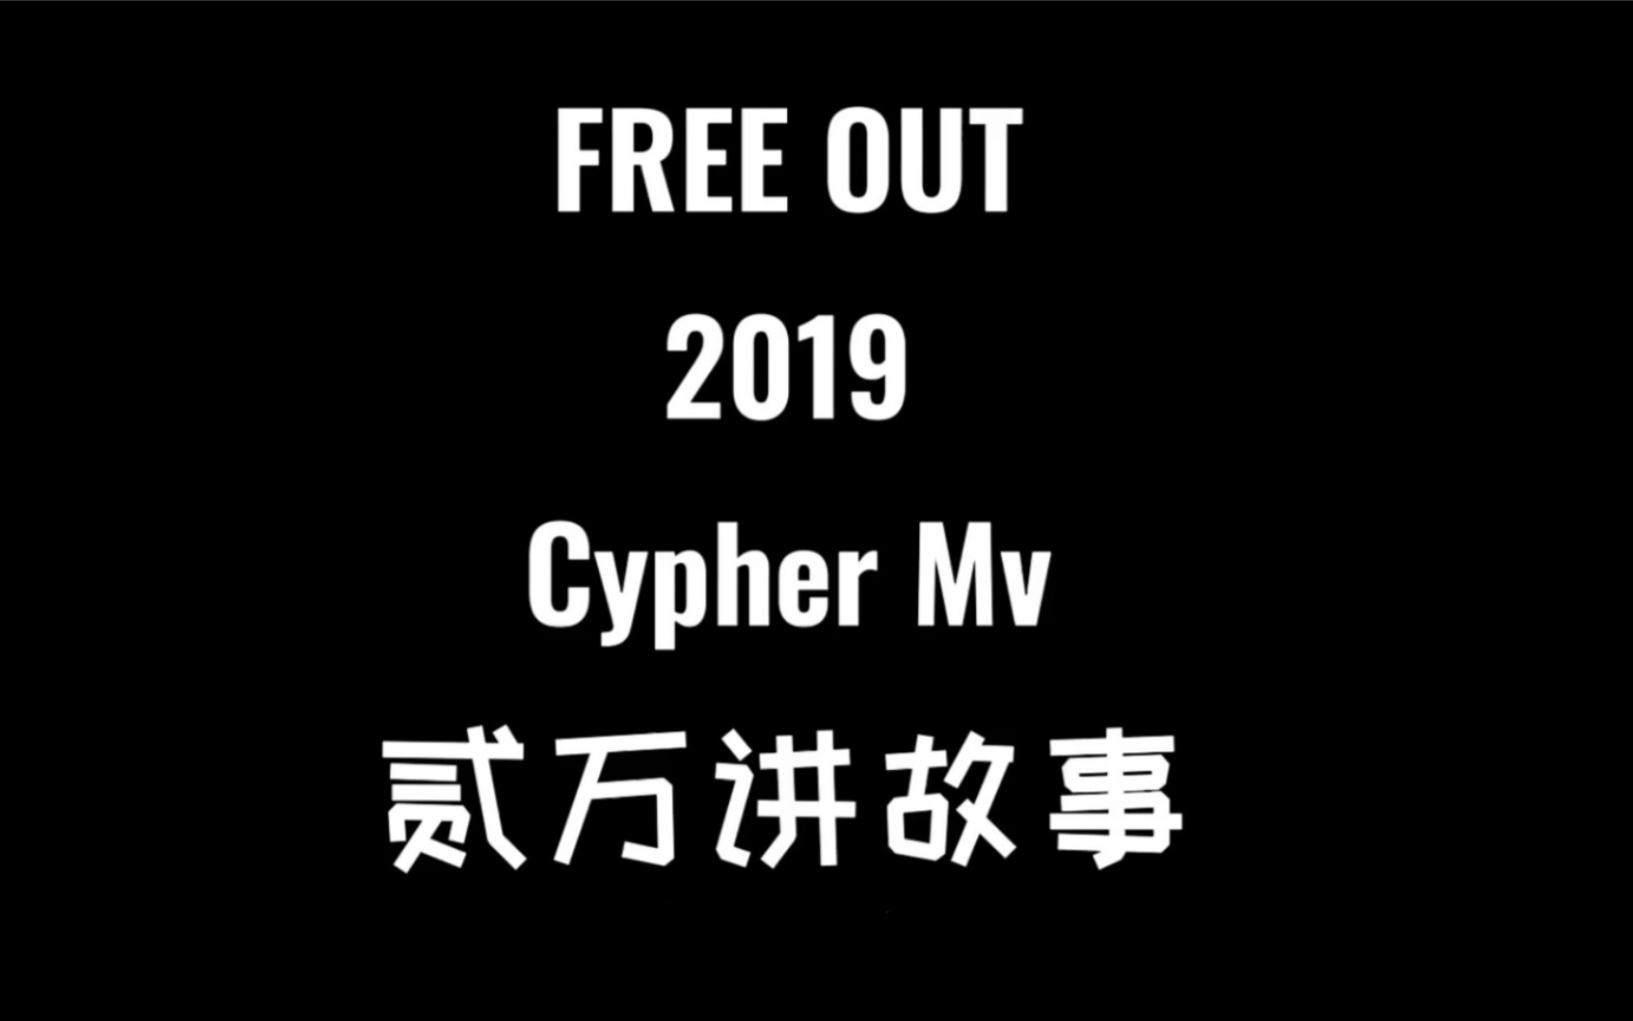 贰万讲故事·Free Out 2019 Cypher Mv